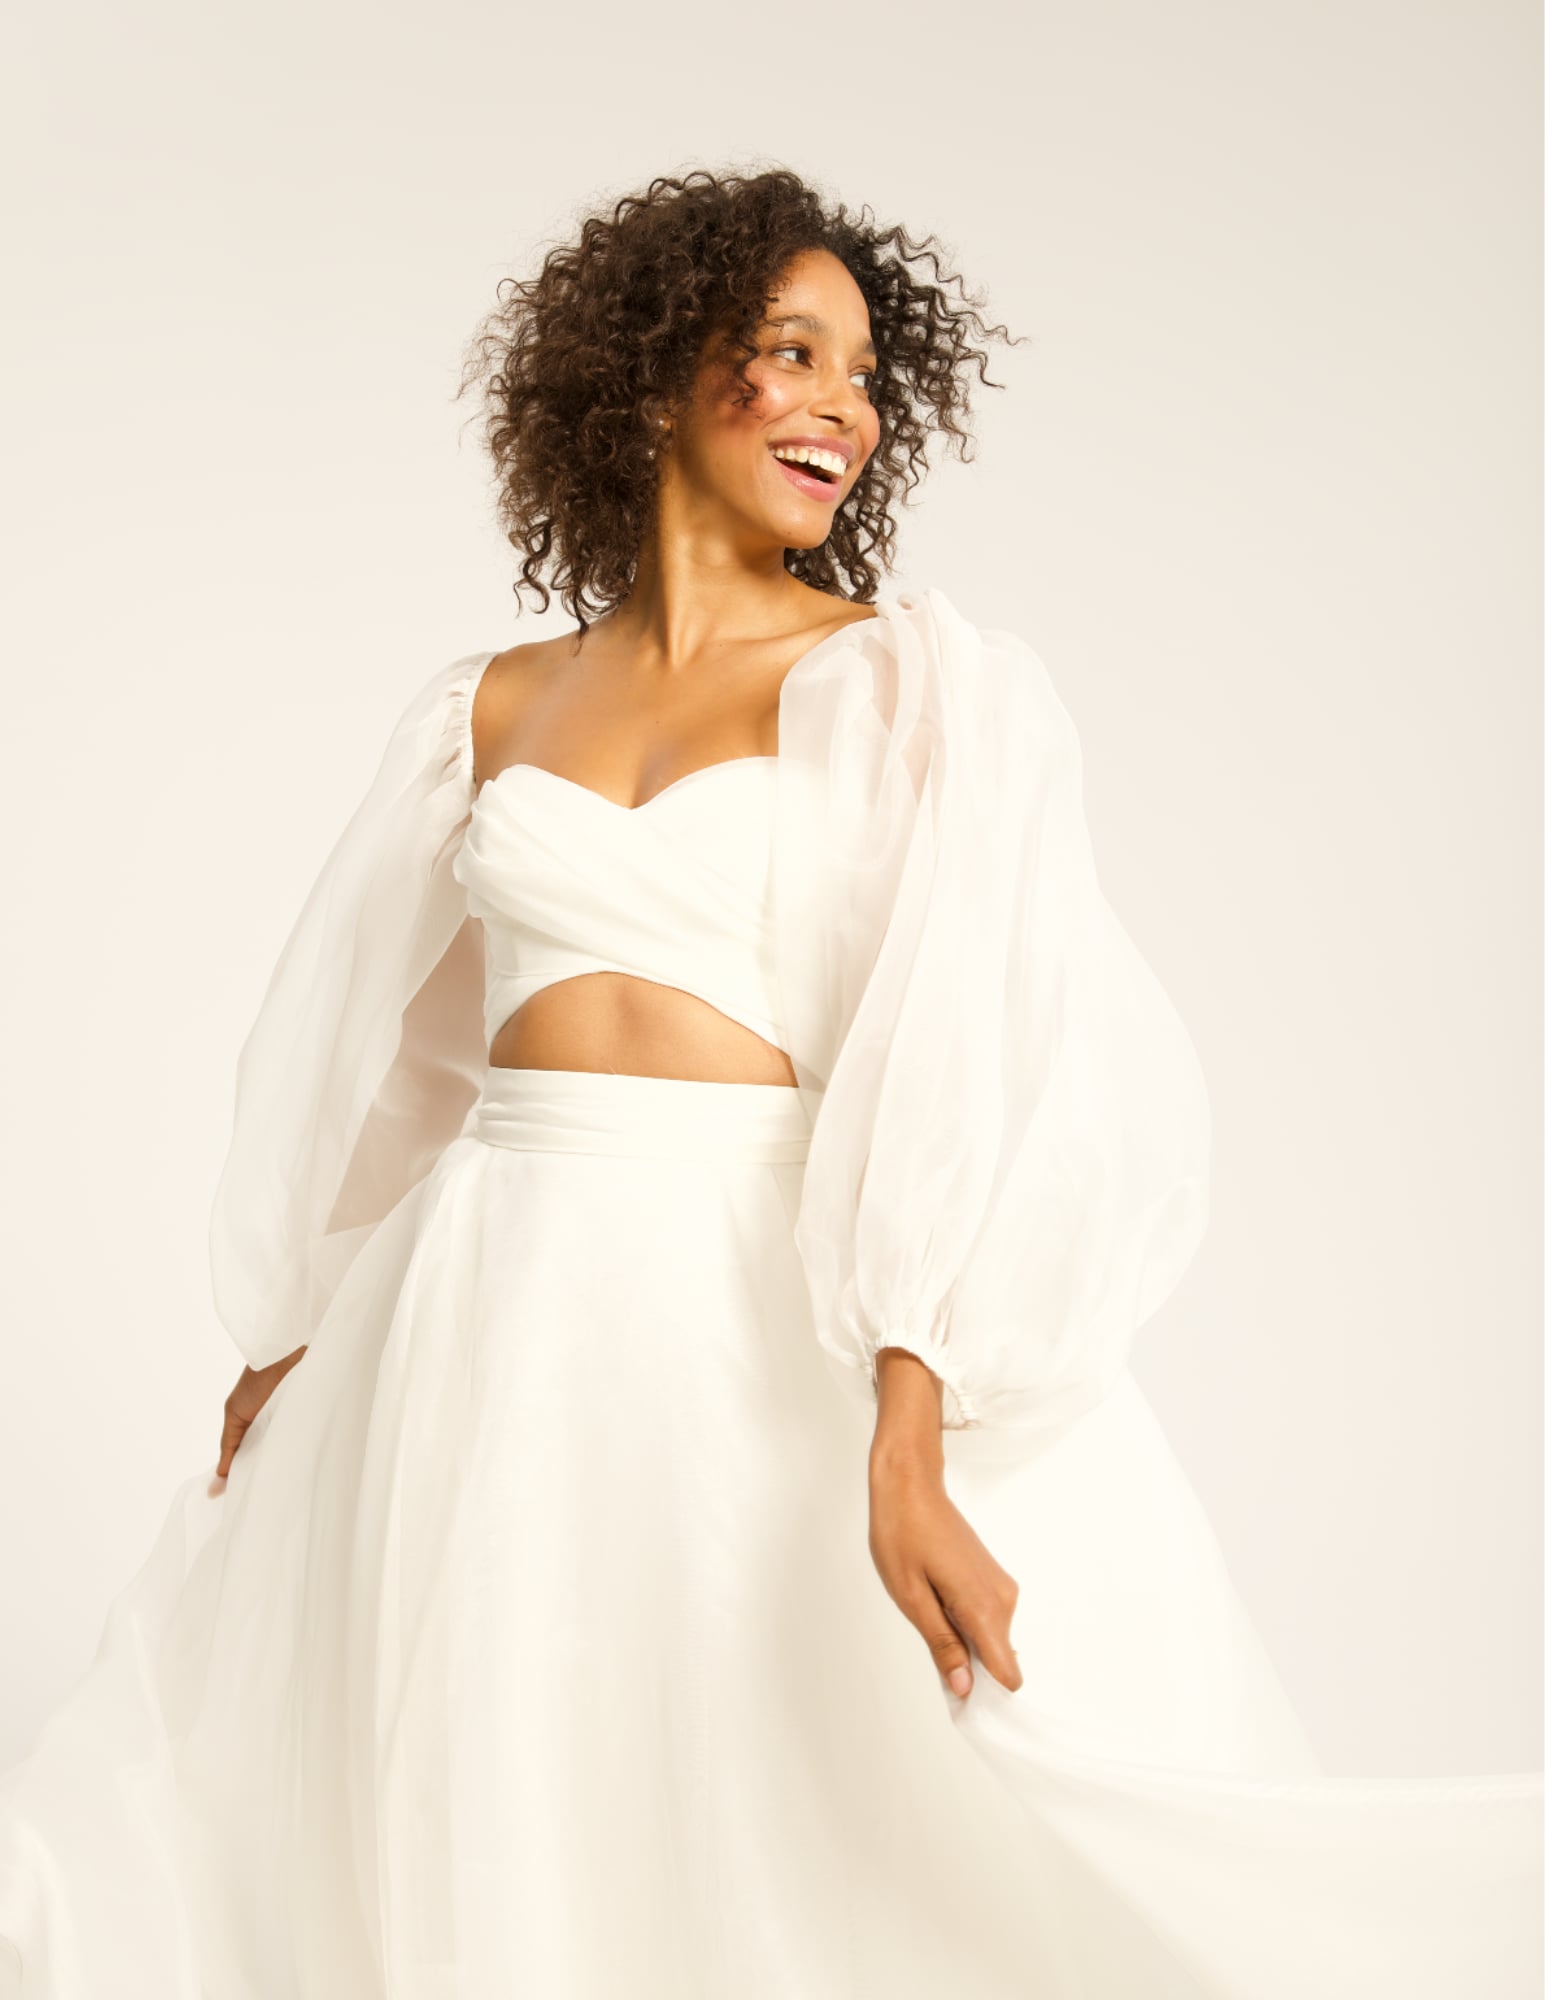 Kim Kassas Fall 2022 Wedding Dresses — “Siren Call” Bridal Collection